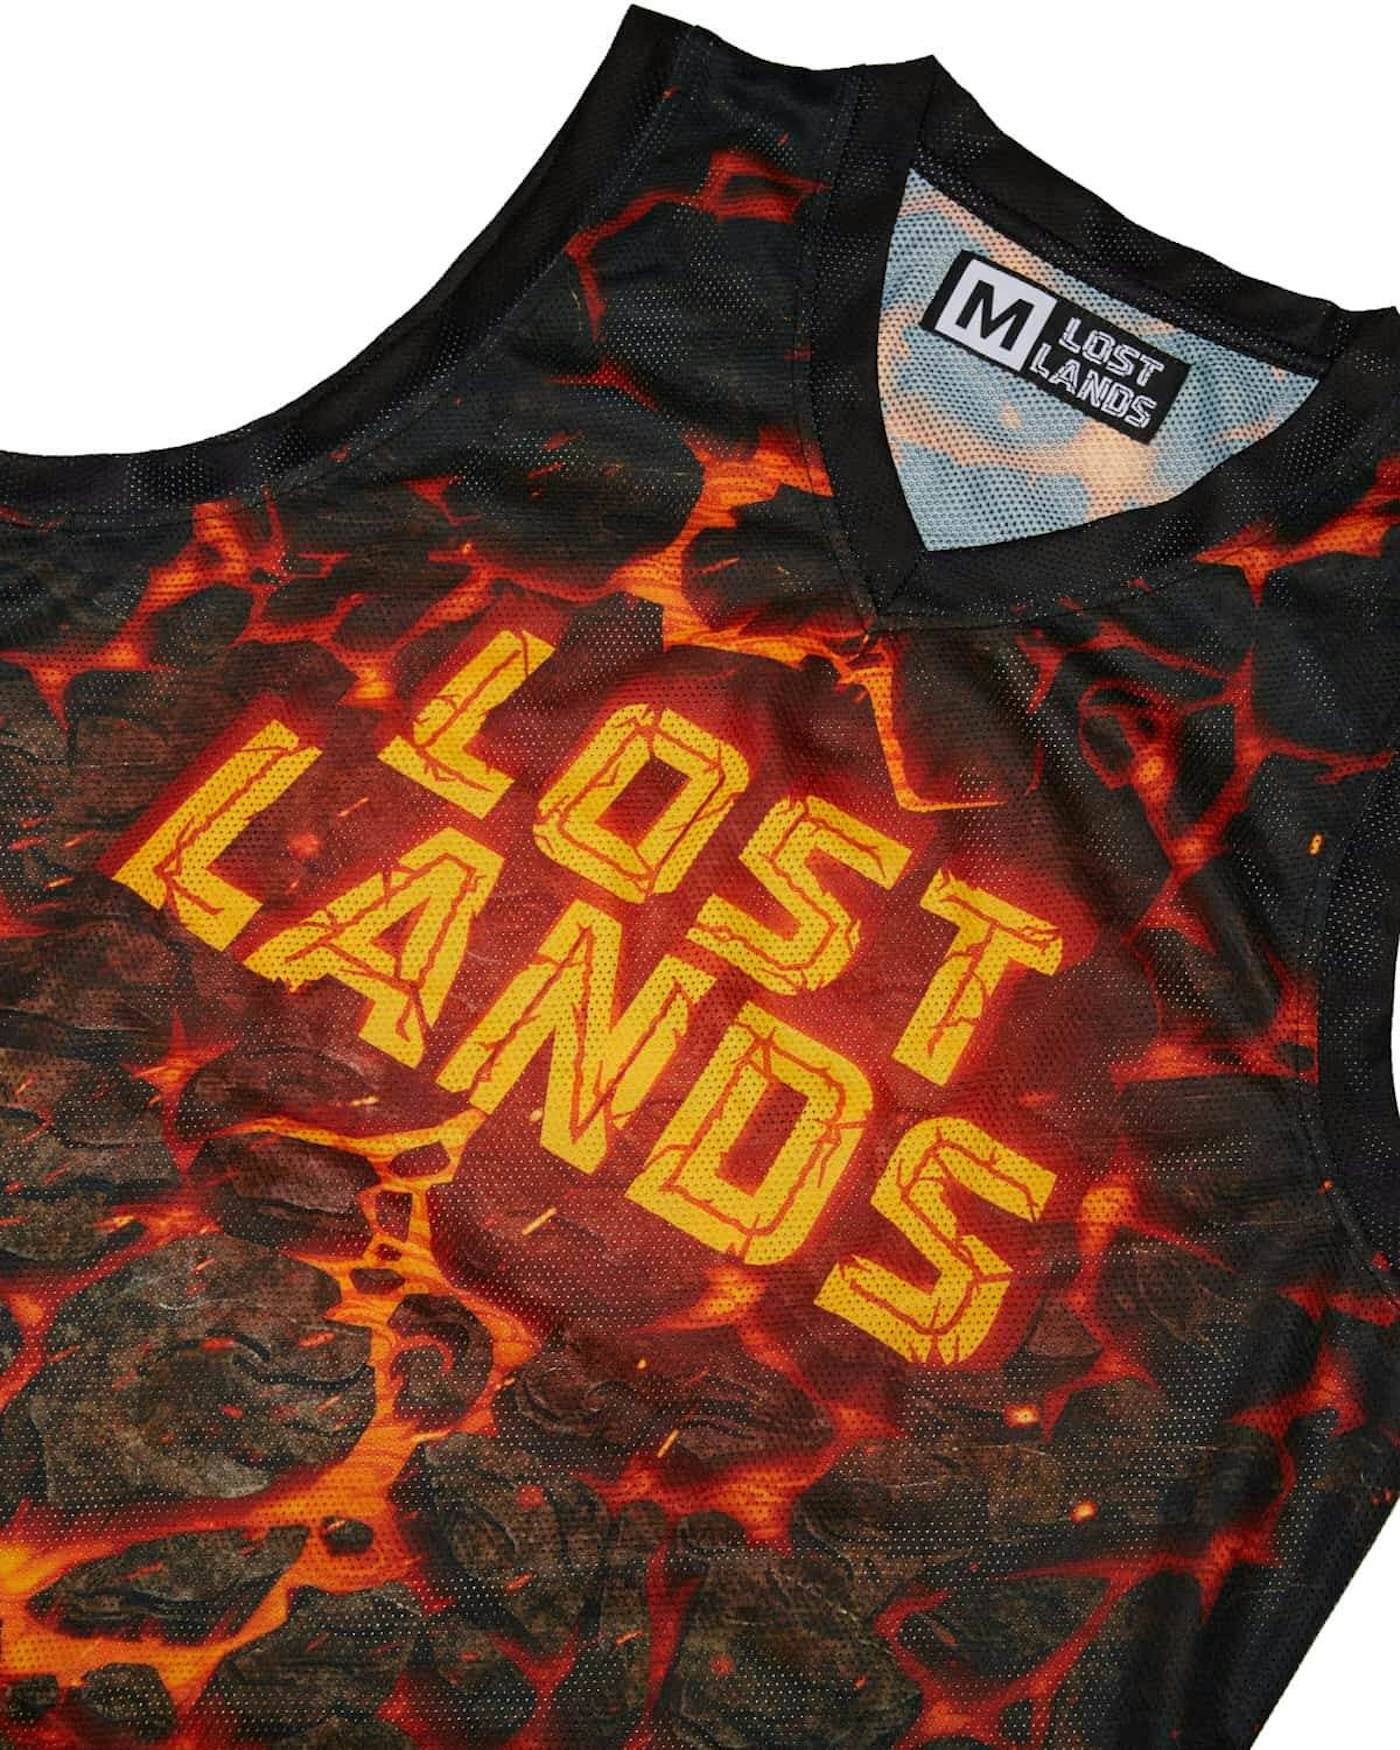 Lost Lands 'Rex' Baseball Jersey (Black/Green)